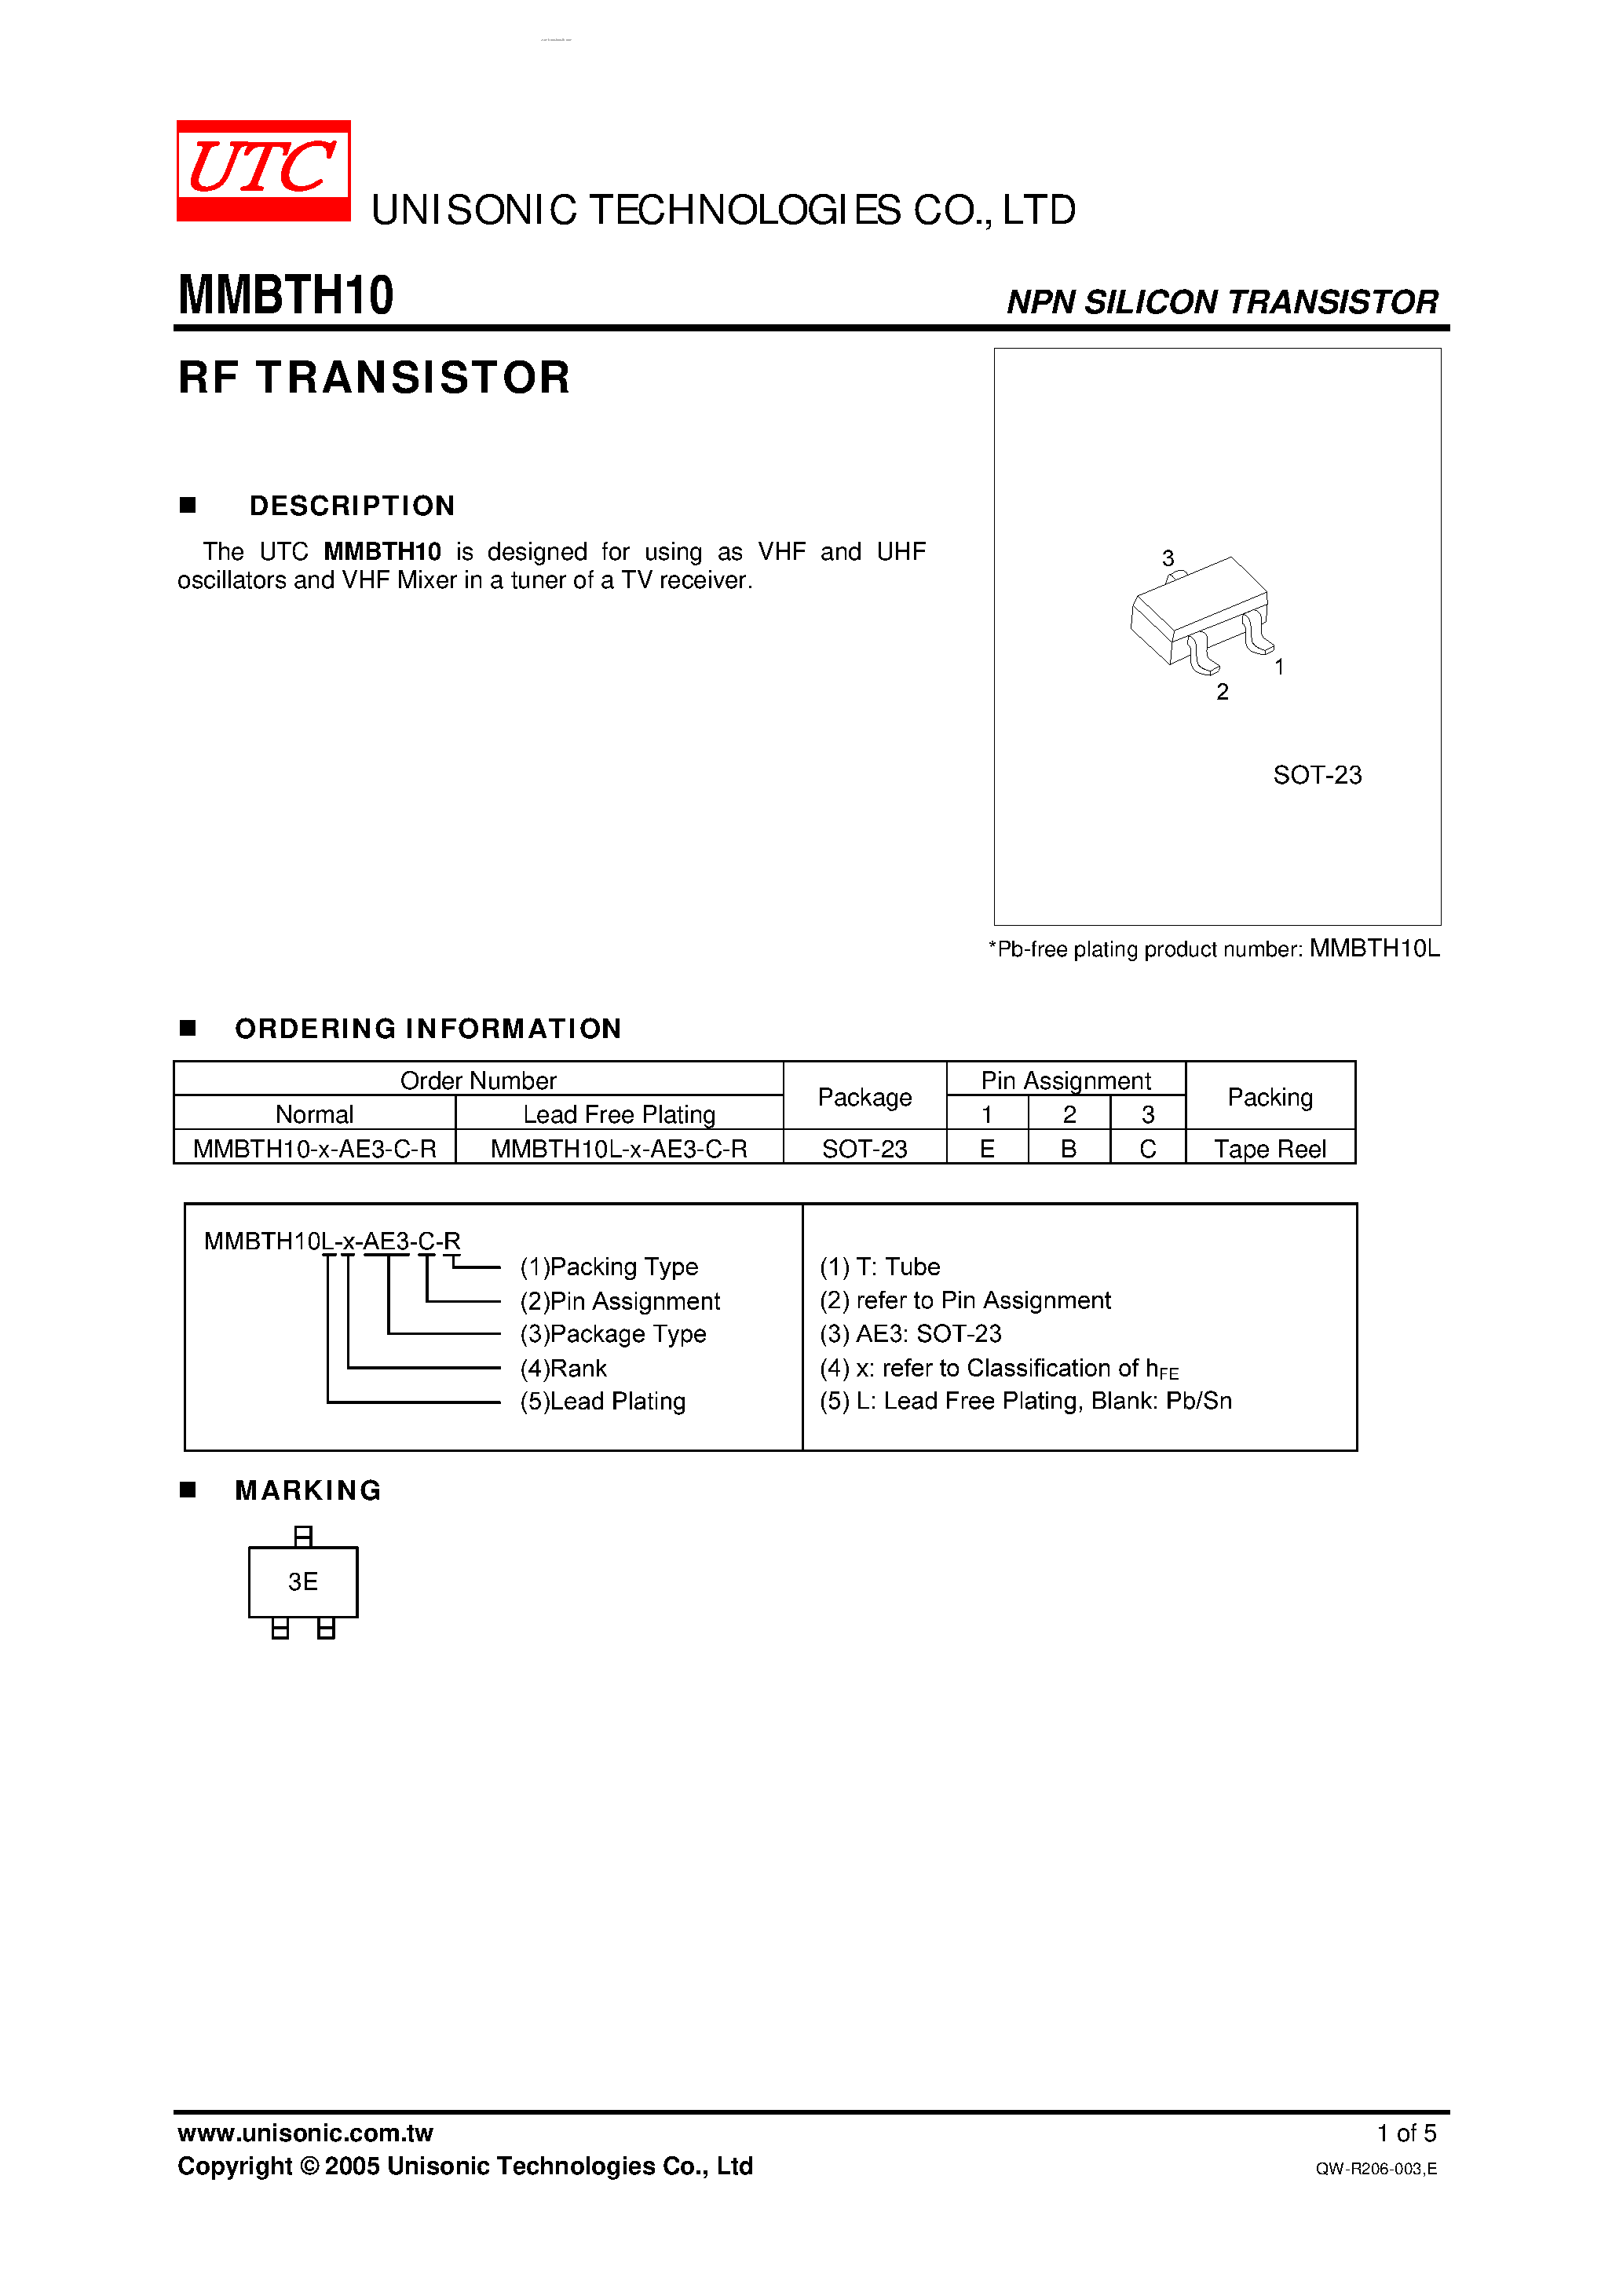 Datasheet MMBTH10 - RF TRANSISTOR page 1